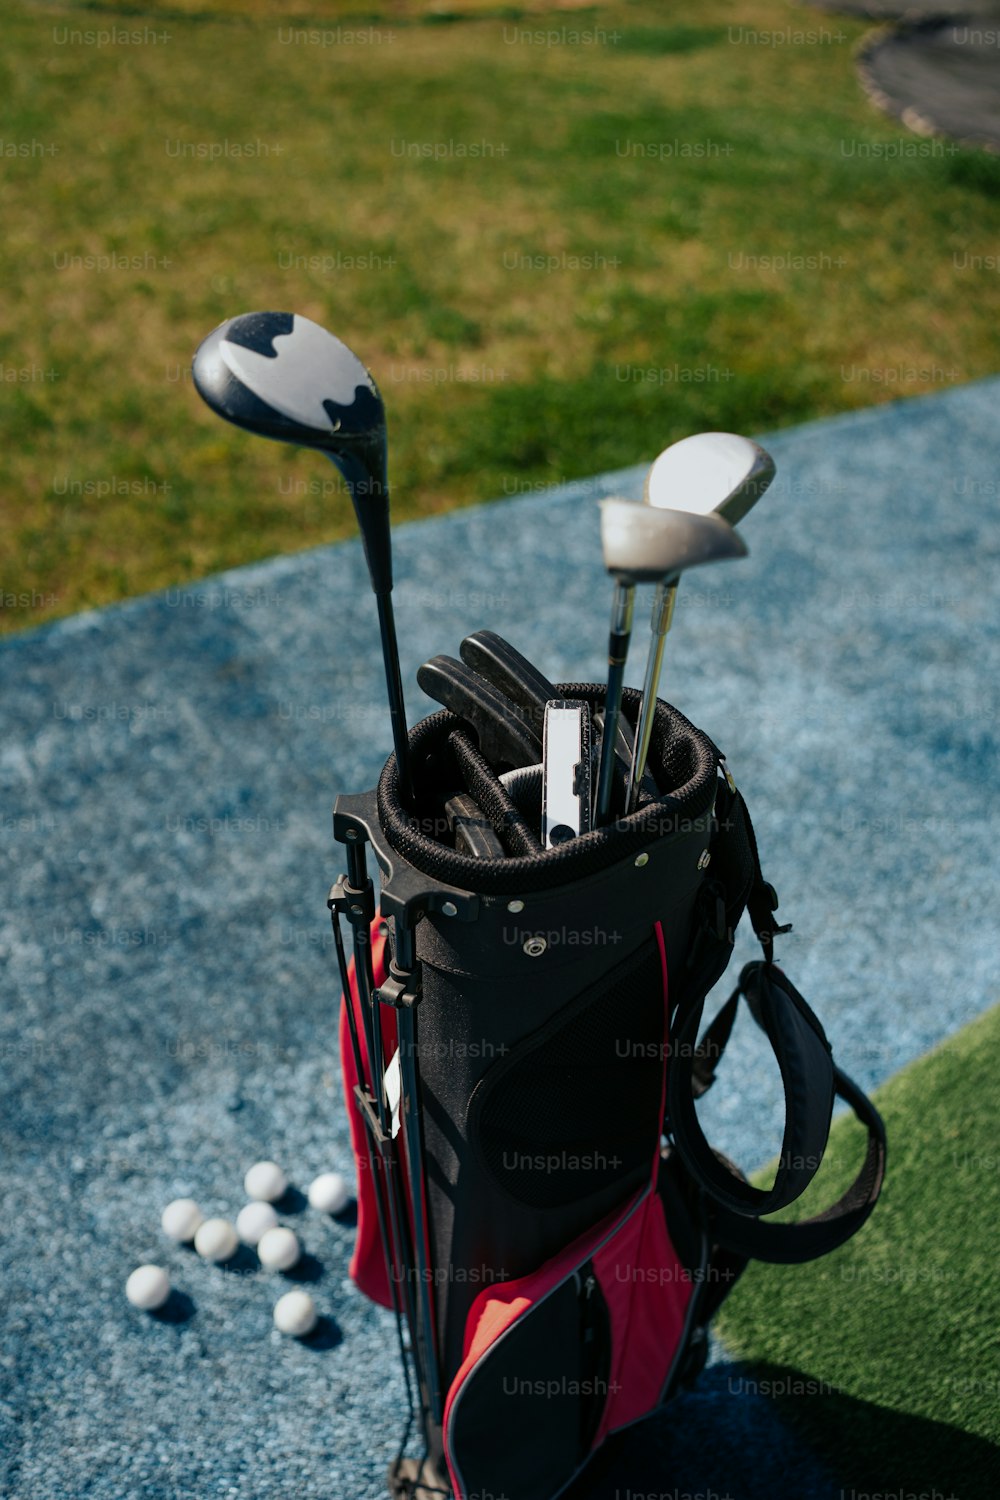 un sac de golf rempli de balles de golf et de clubs